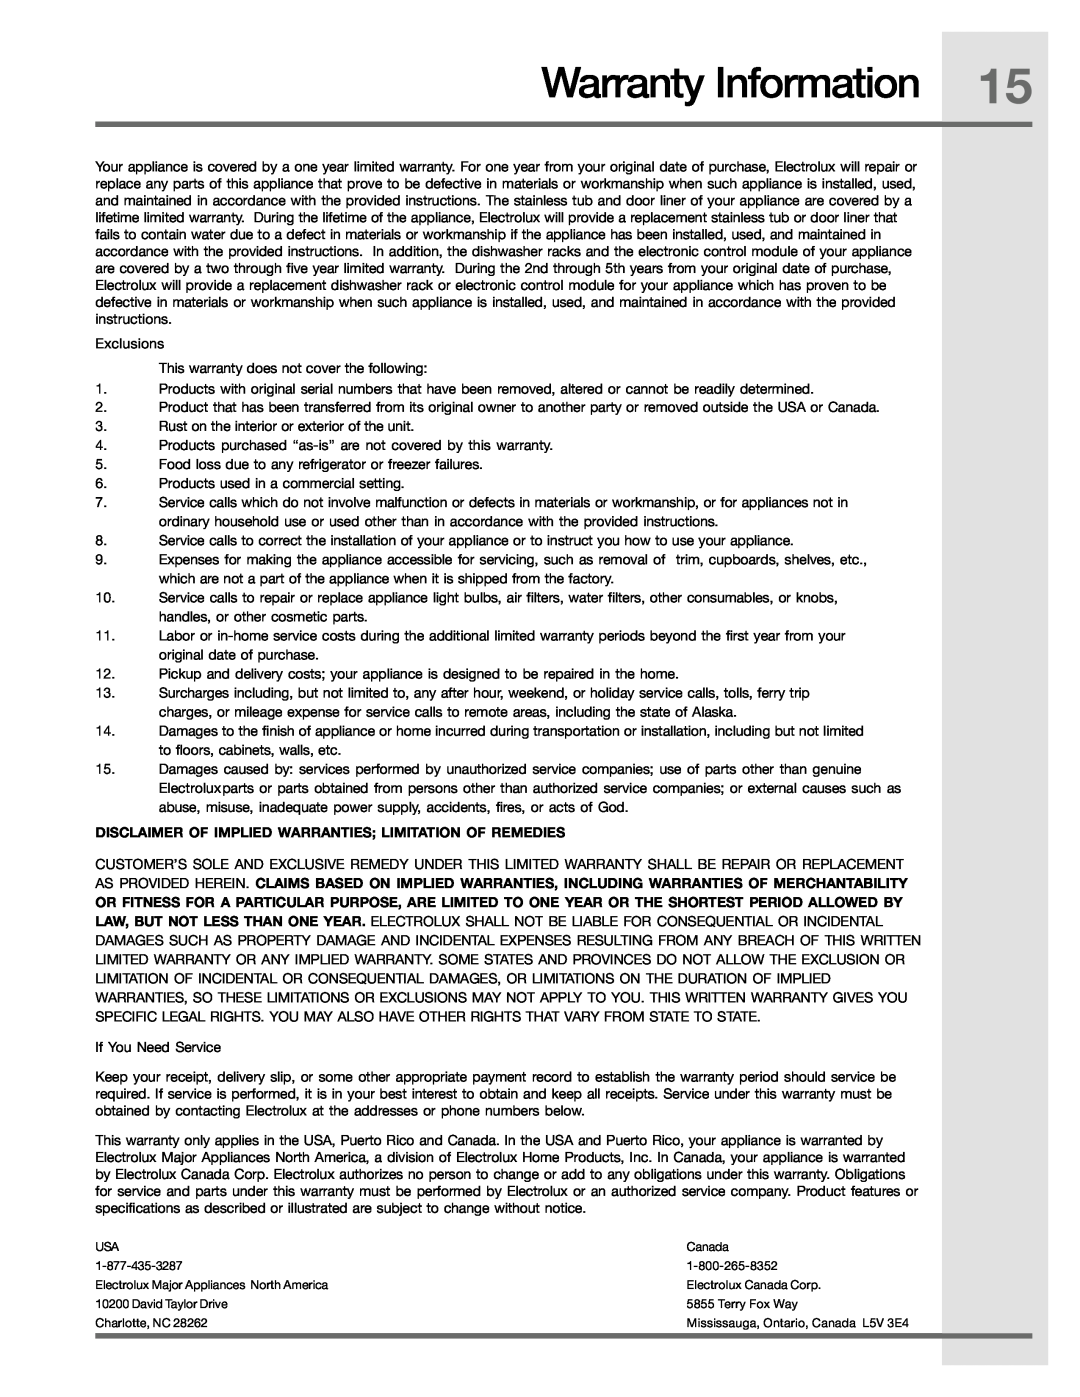 Electrolux 2001/05, 6.75E+11 manual Warranty Information, Disclaimer Of Implied Warranties Limitation Of Remedies 